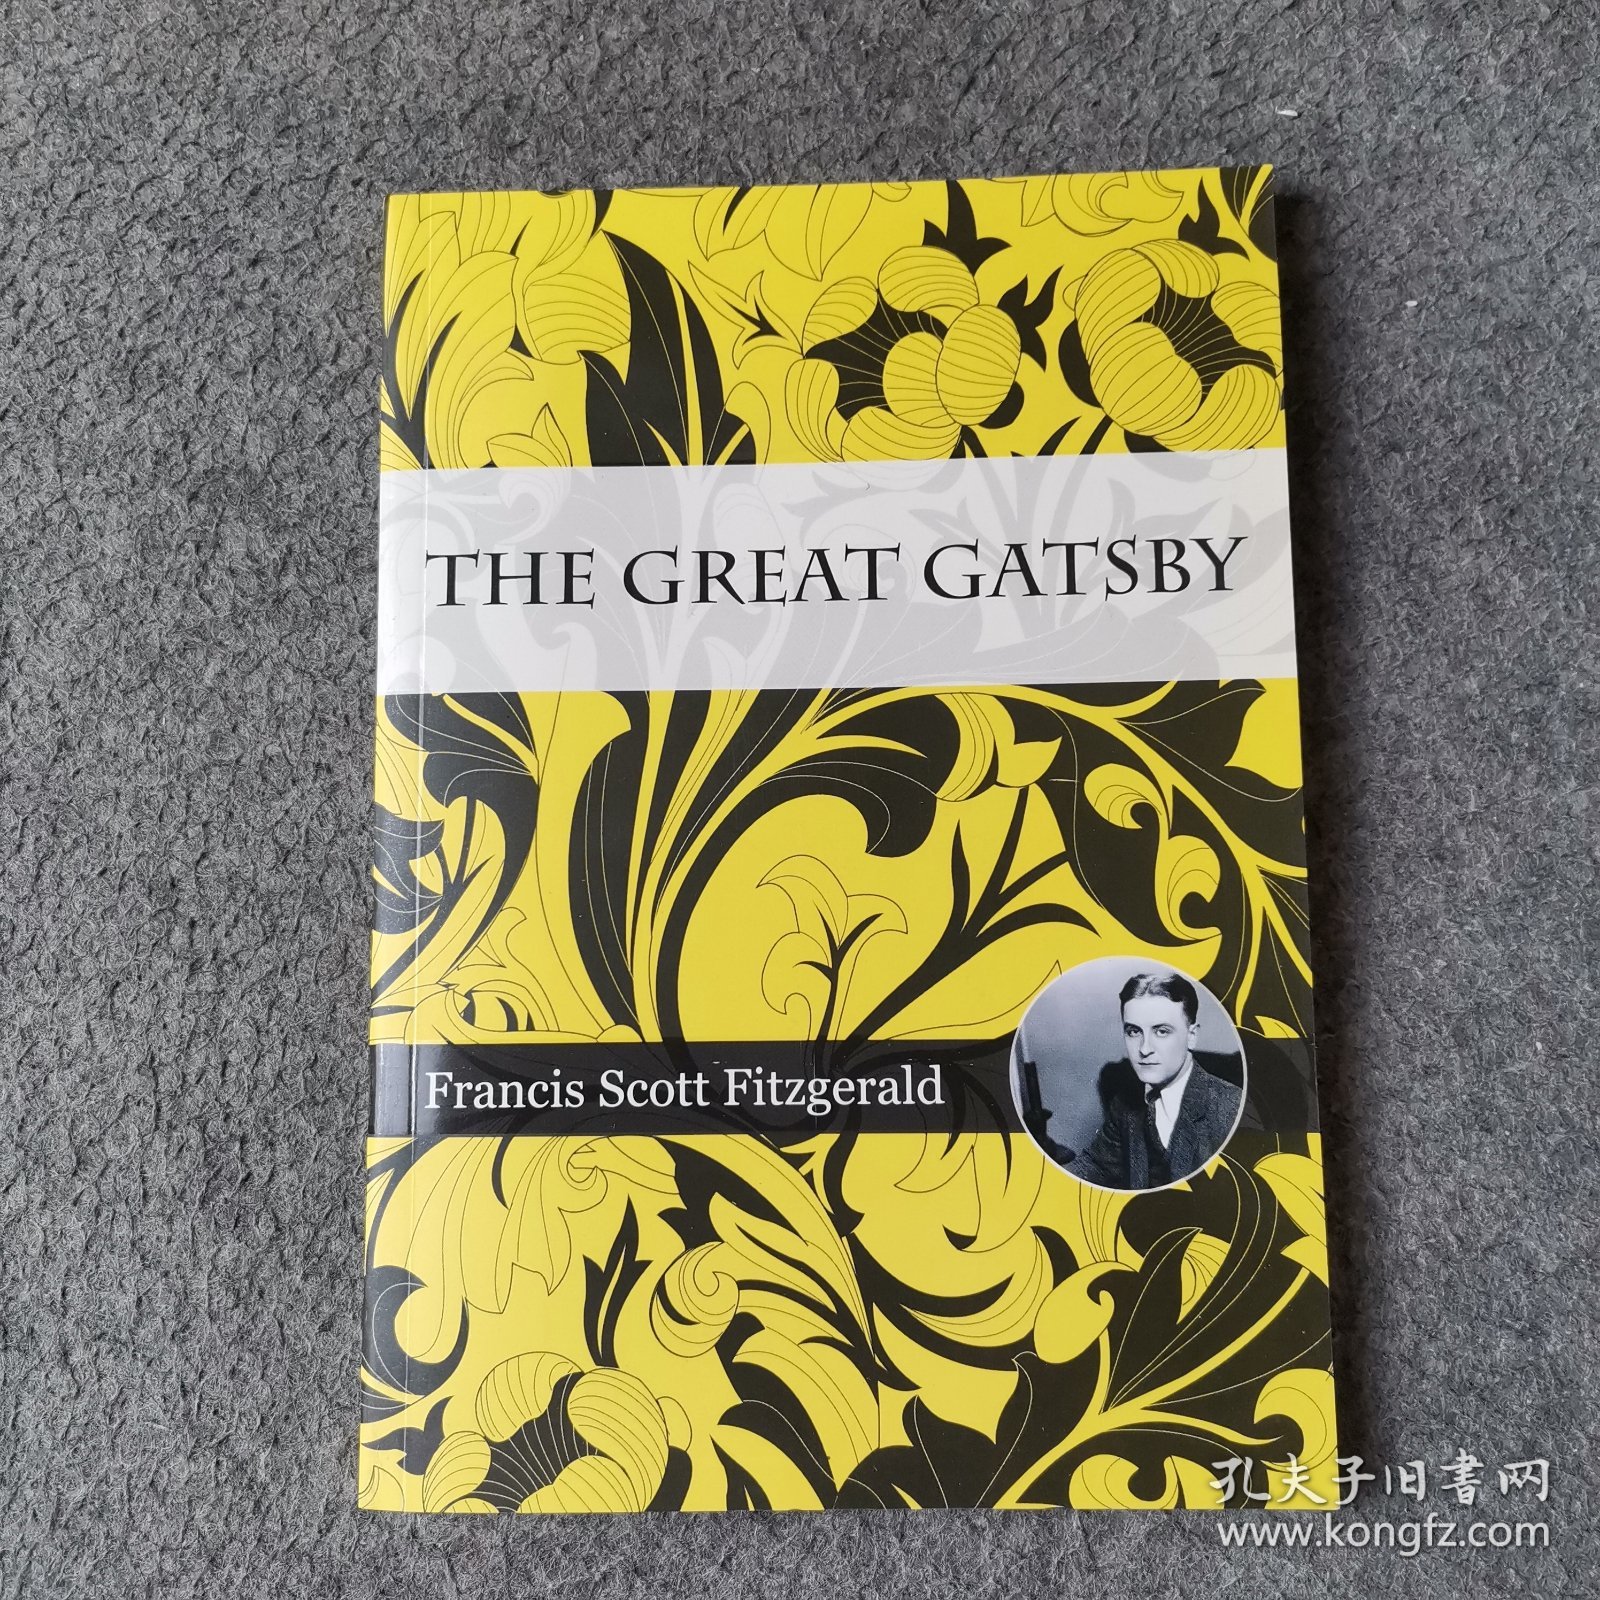 THE GREAT GATSBY 英文版